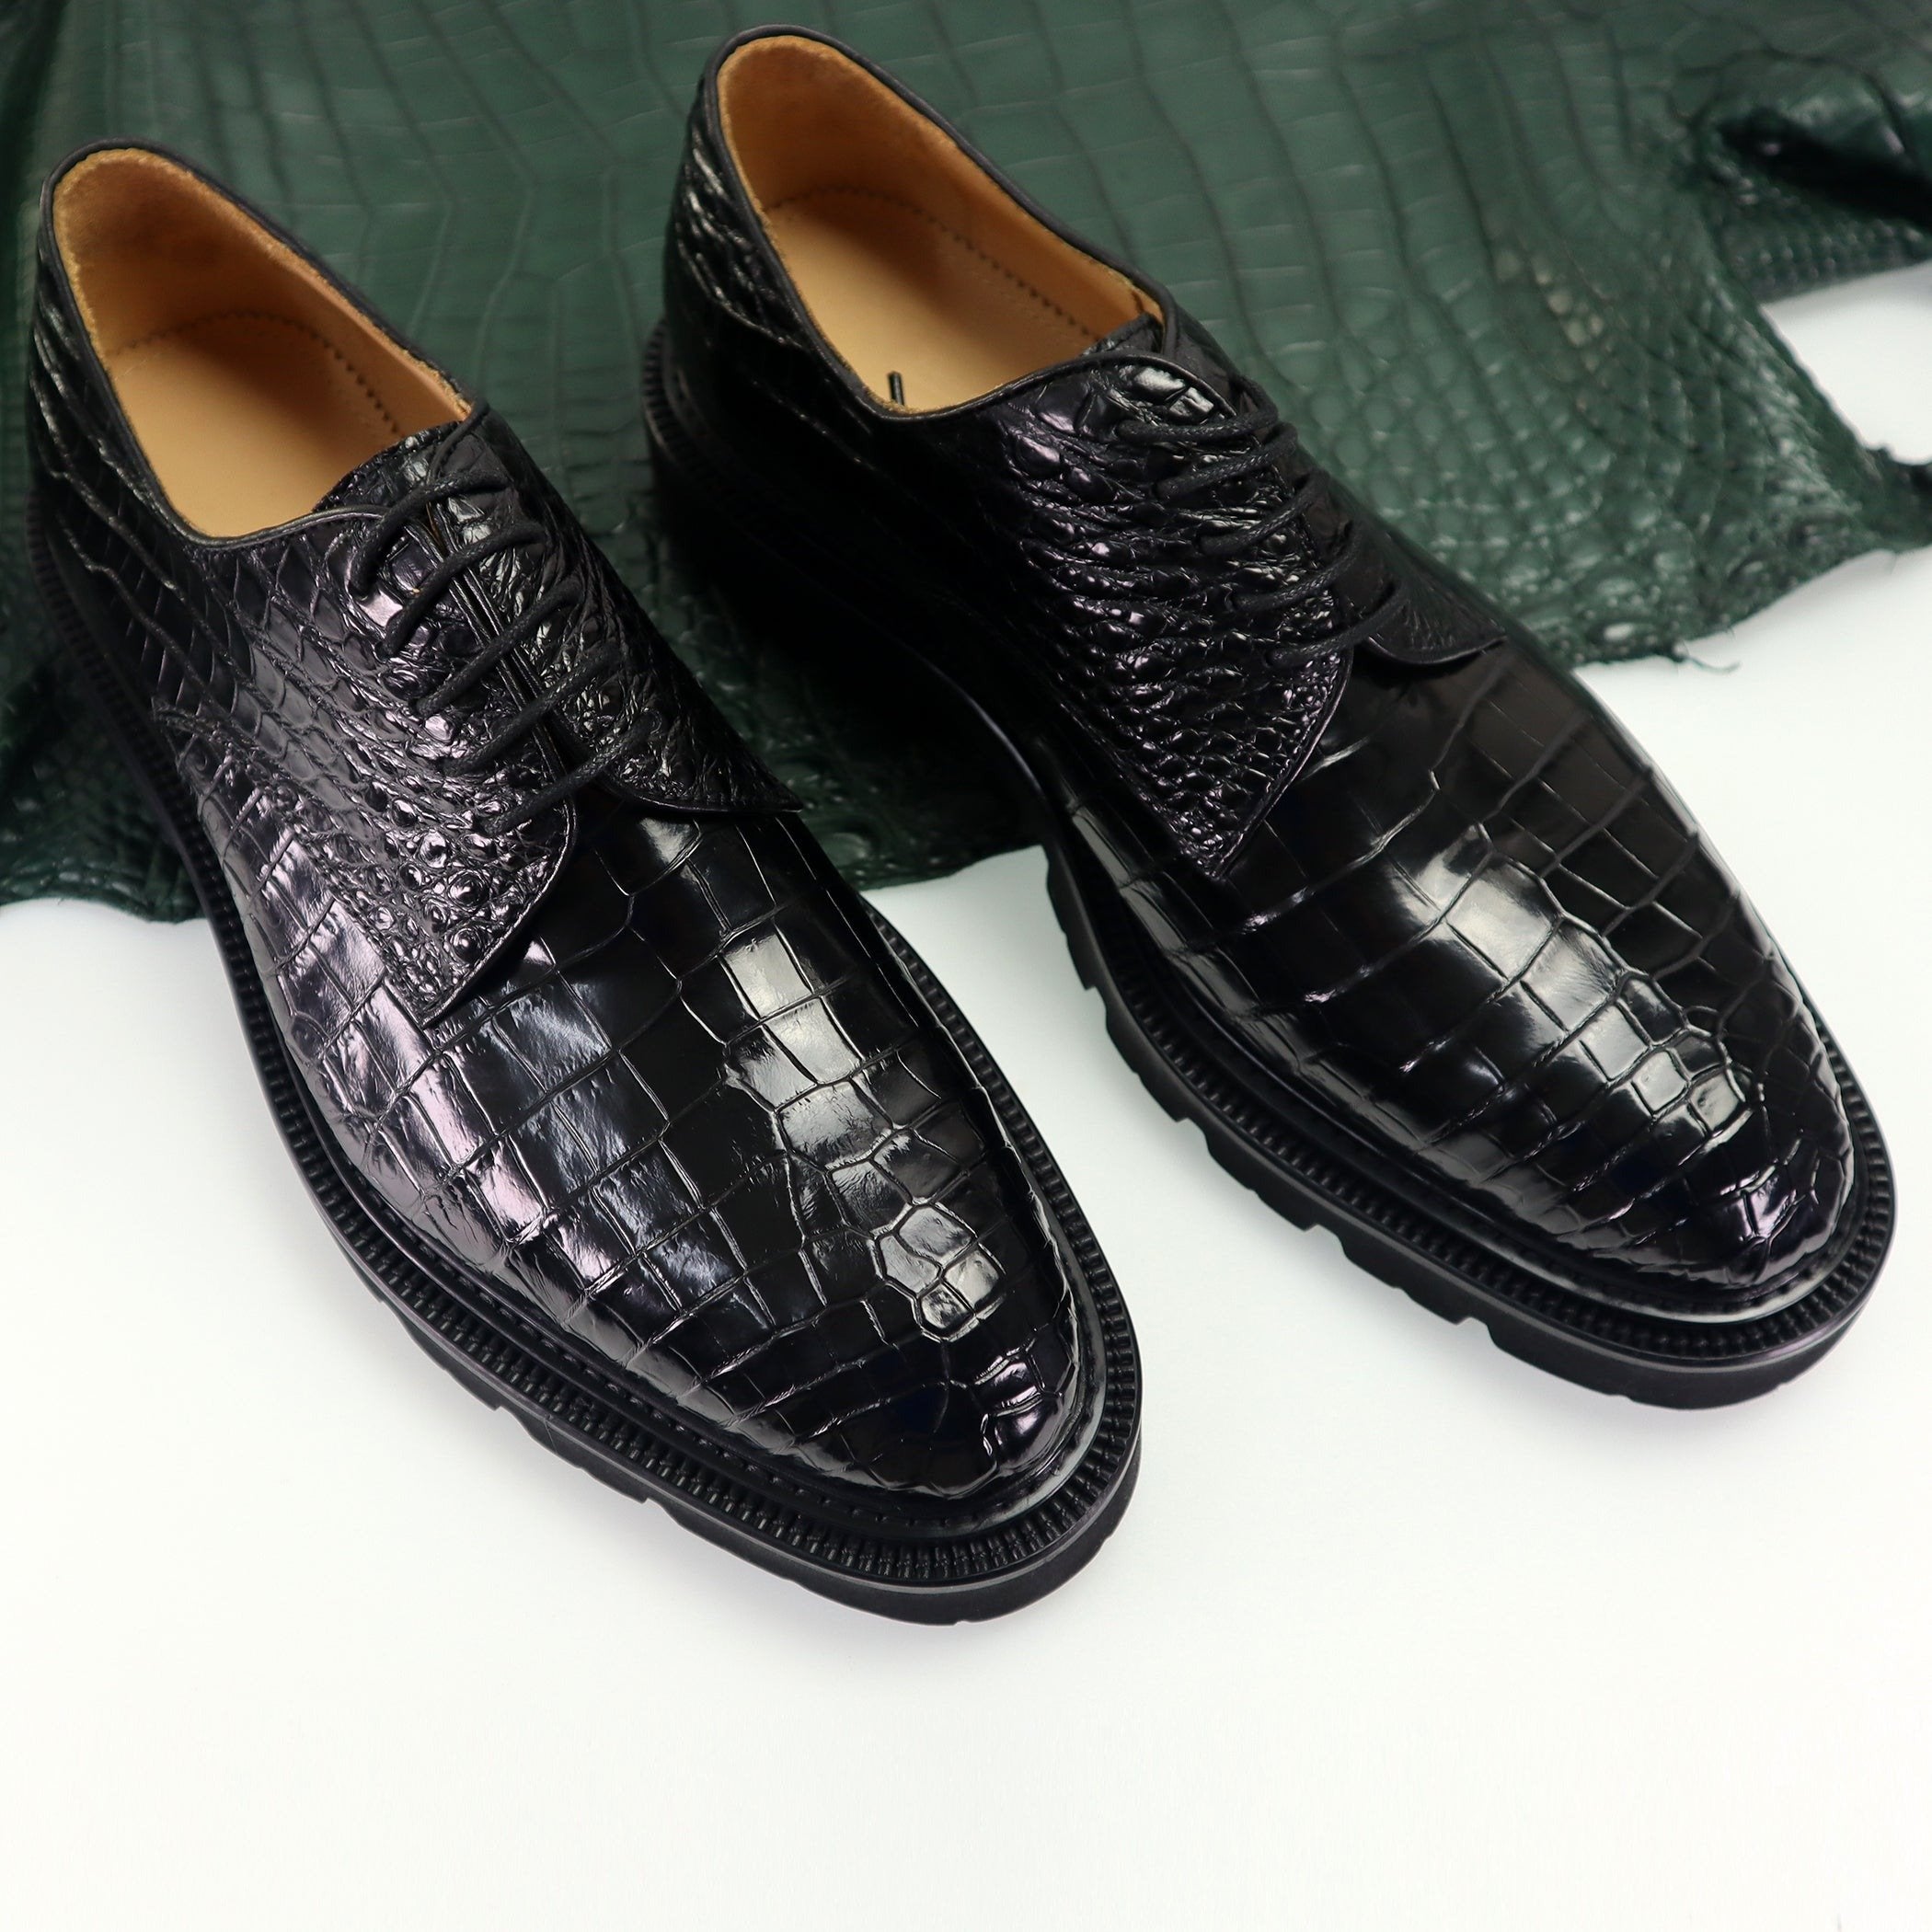 Genuine Alligator Leather Dress Shoes Lace Up Cap-Toe Brogue Shoes